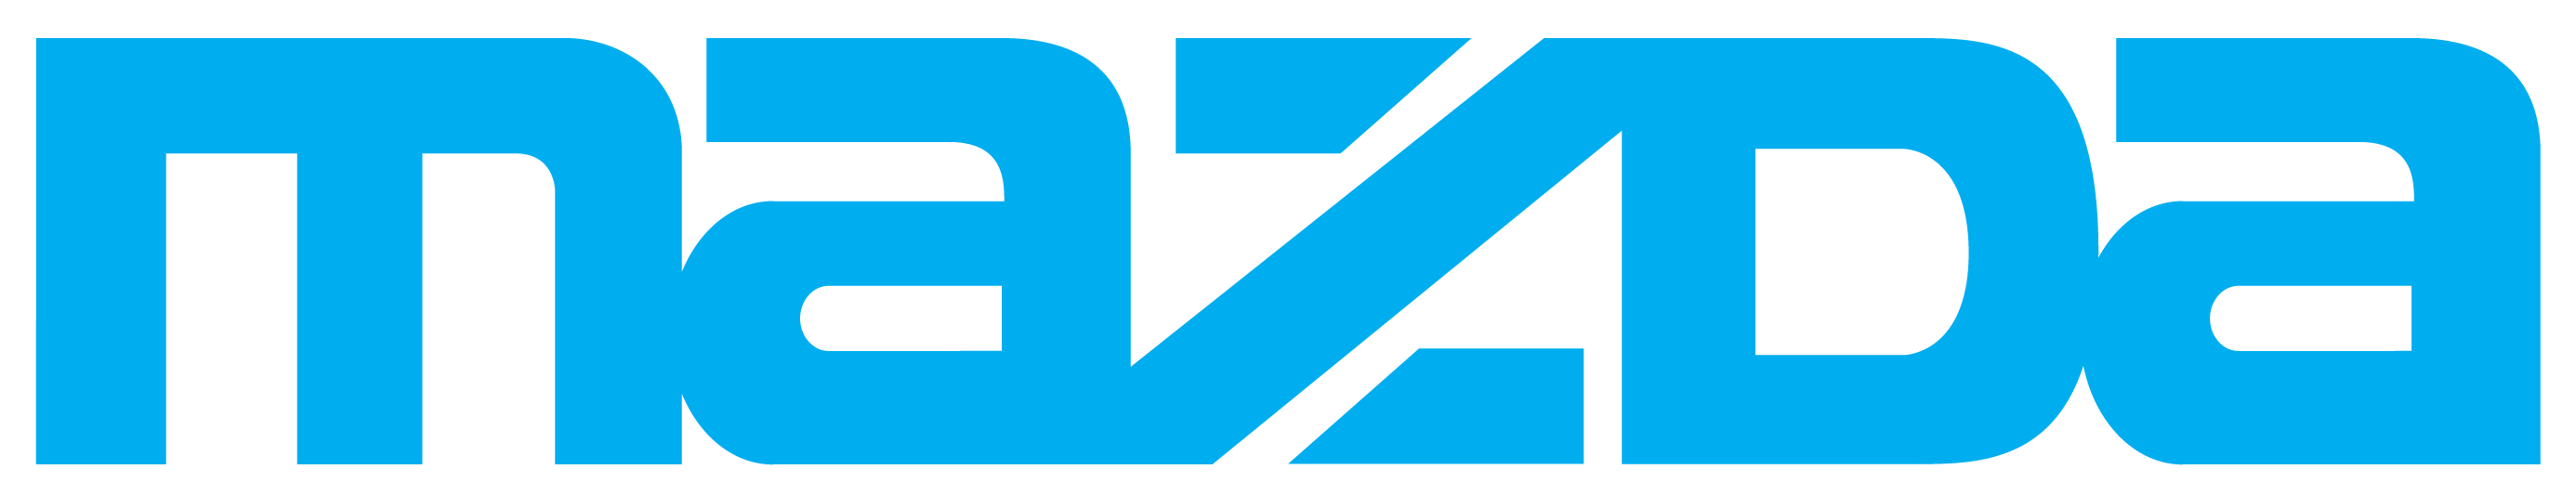 http://upload.wikimedia.org/wikipedia/commons/9/90/Mazda_Logo3.png